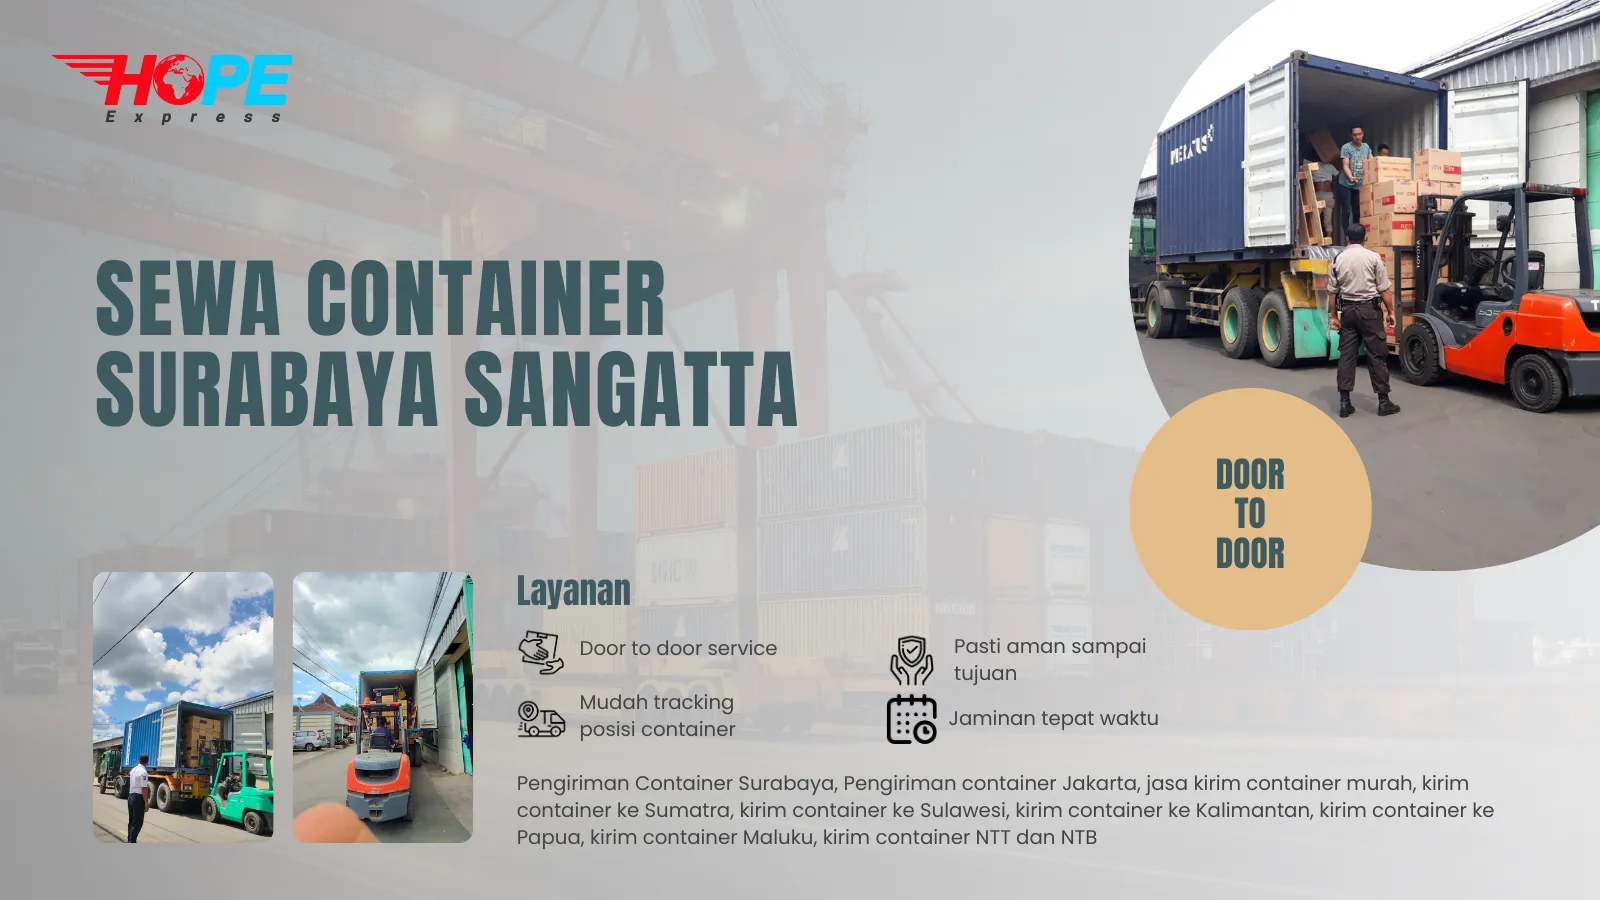 Sewa Container Surabaya Sangatta